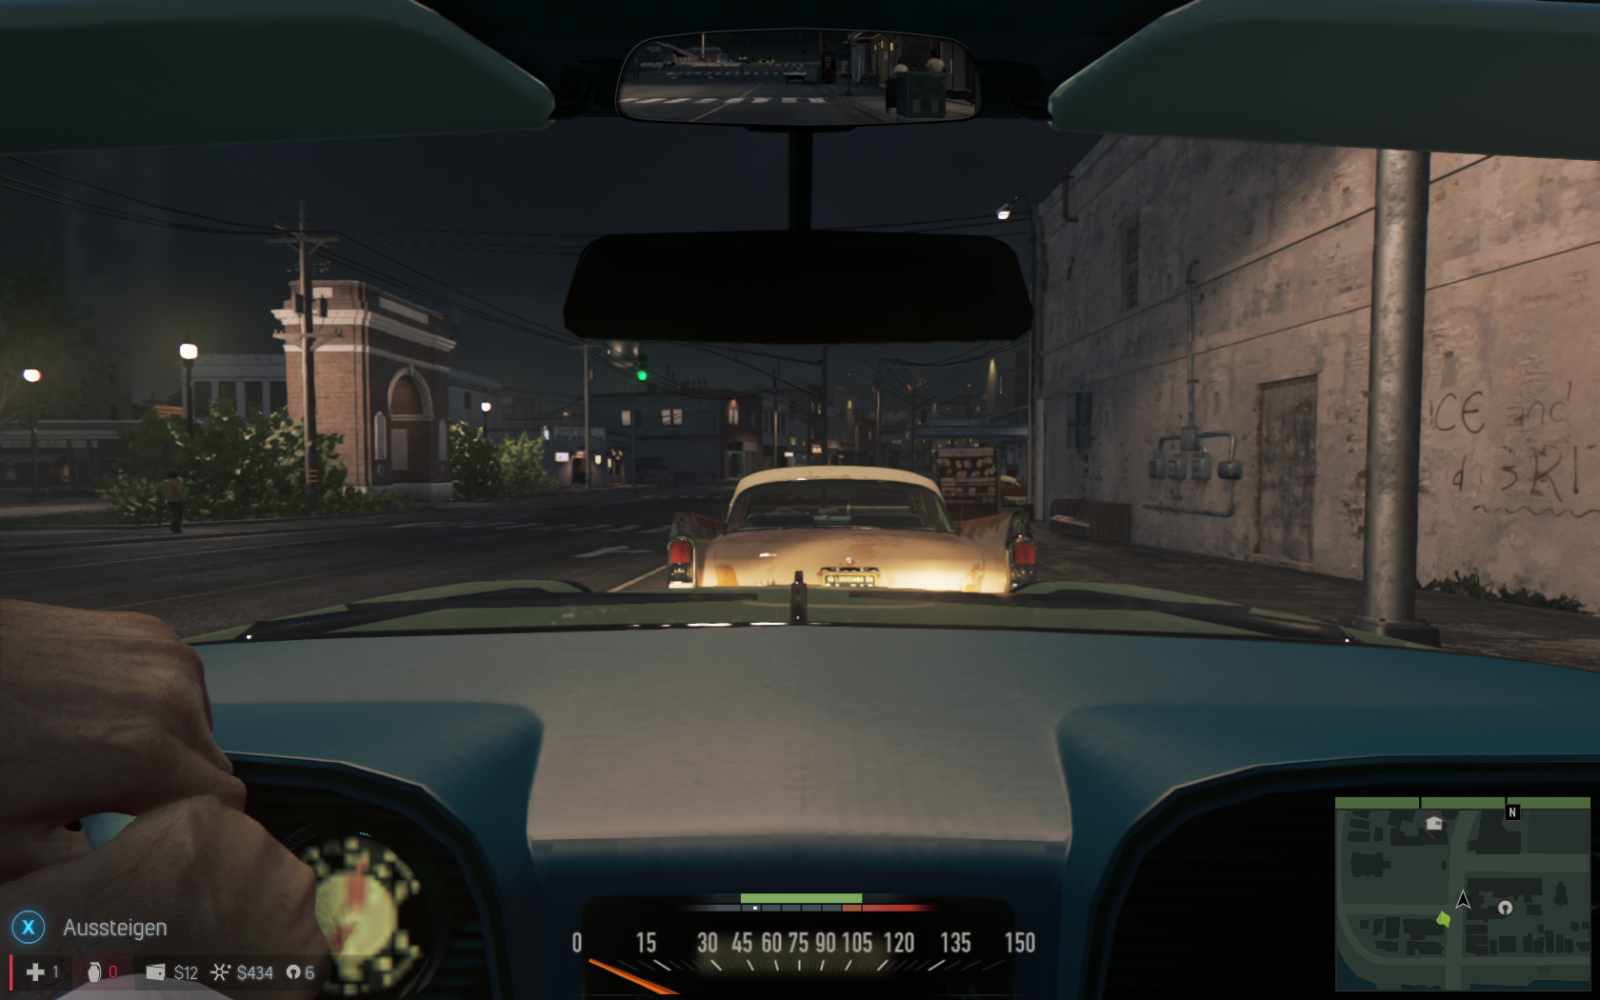 Mafia 3 Definitive Edition VR Mod Gameplay In First Person Is A R.E.A.L.  Trip! - Ian's VR Corner 